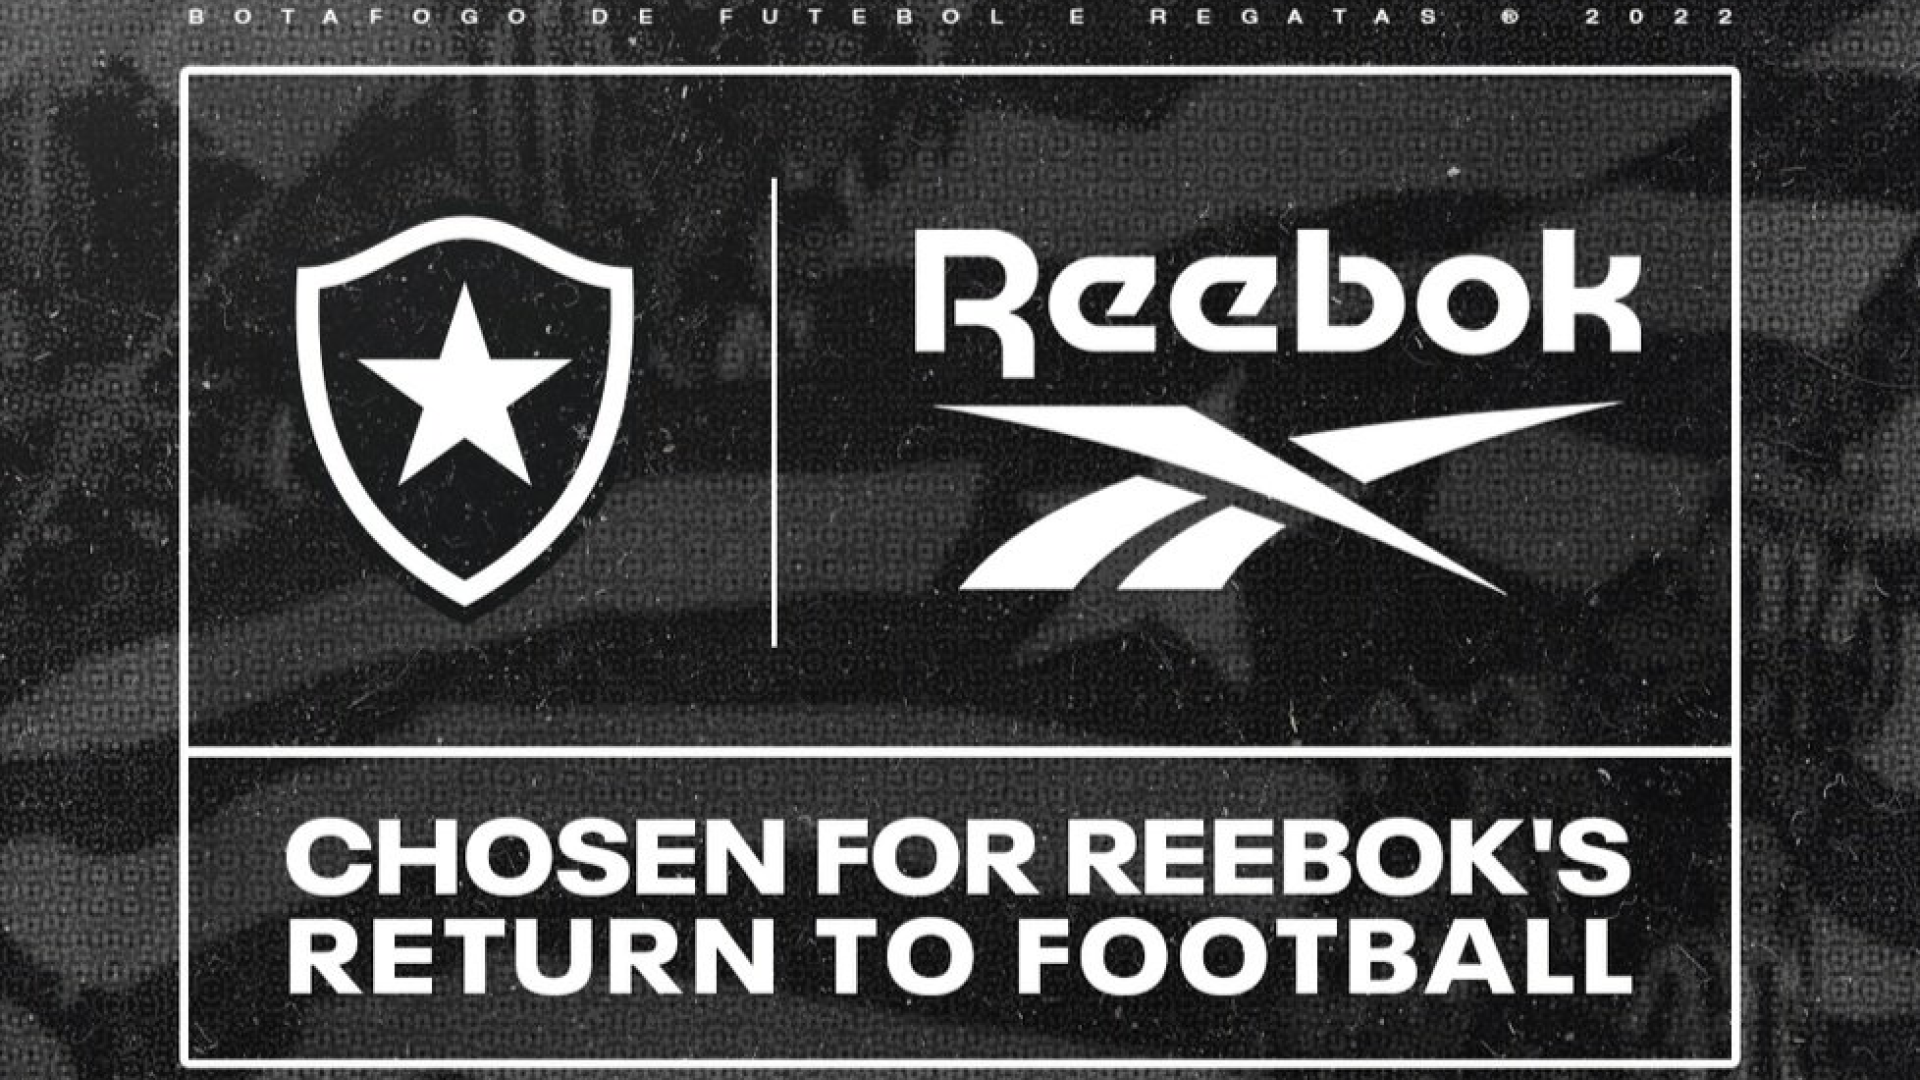 Reebok with Botafogo | License Global